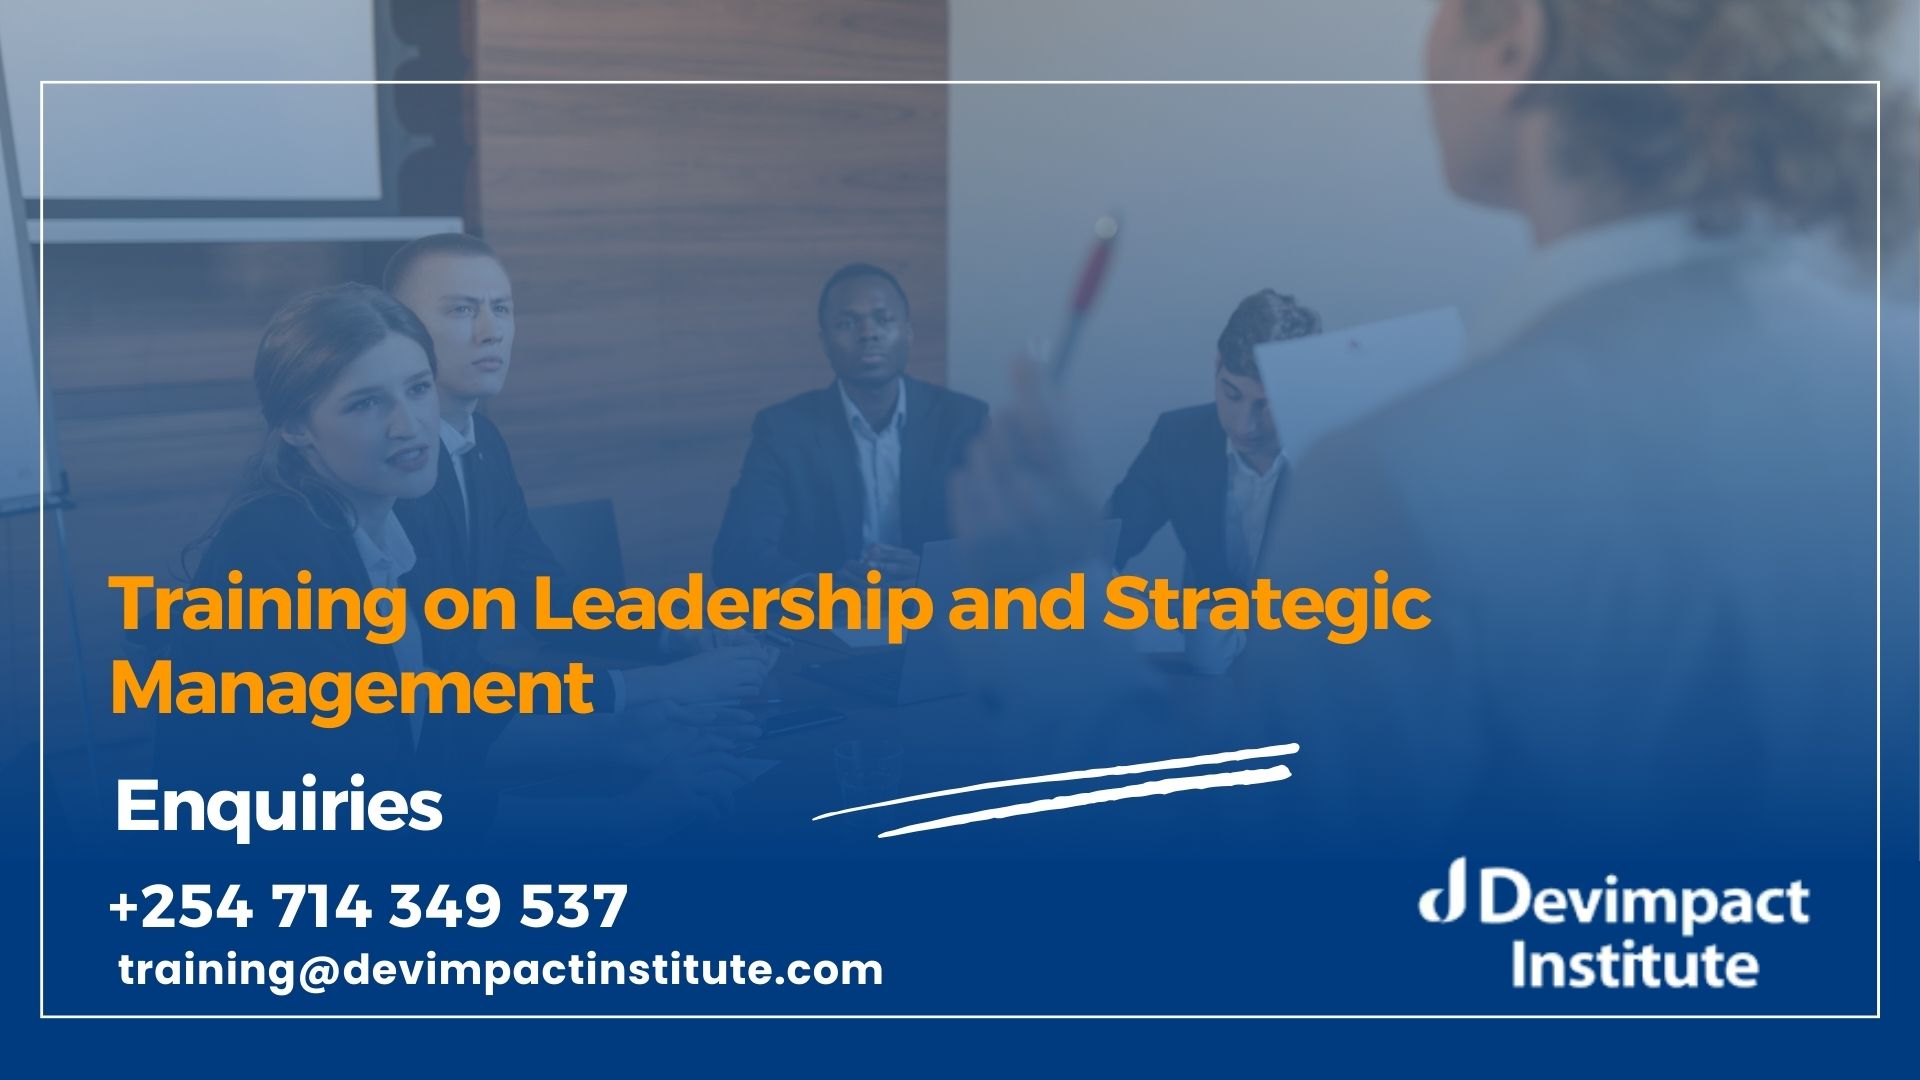 Training on Leadership and Strategic Management, Devimpact Institute, Nairobi, Kenya